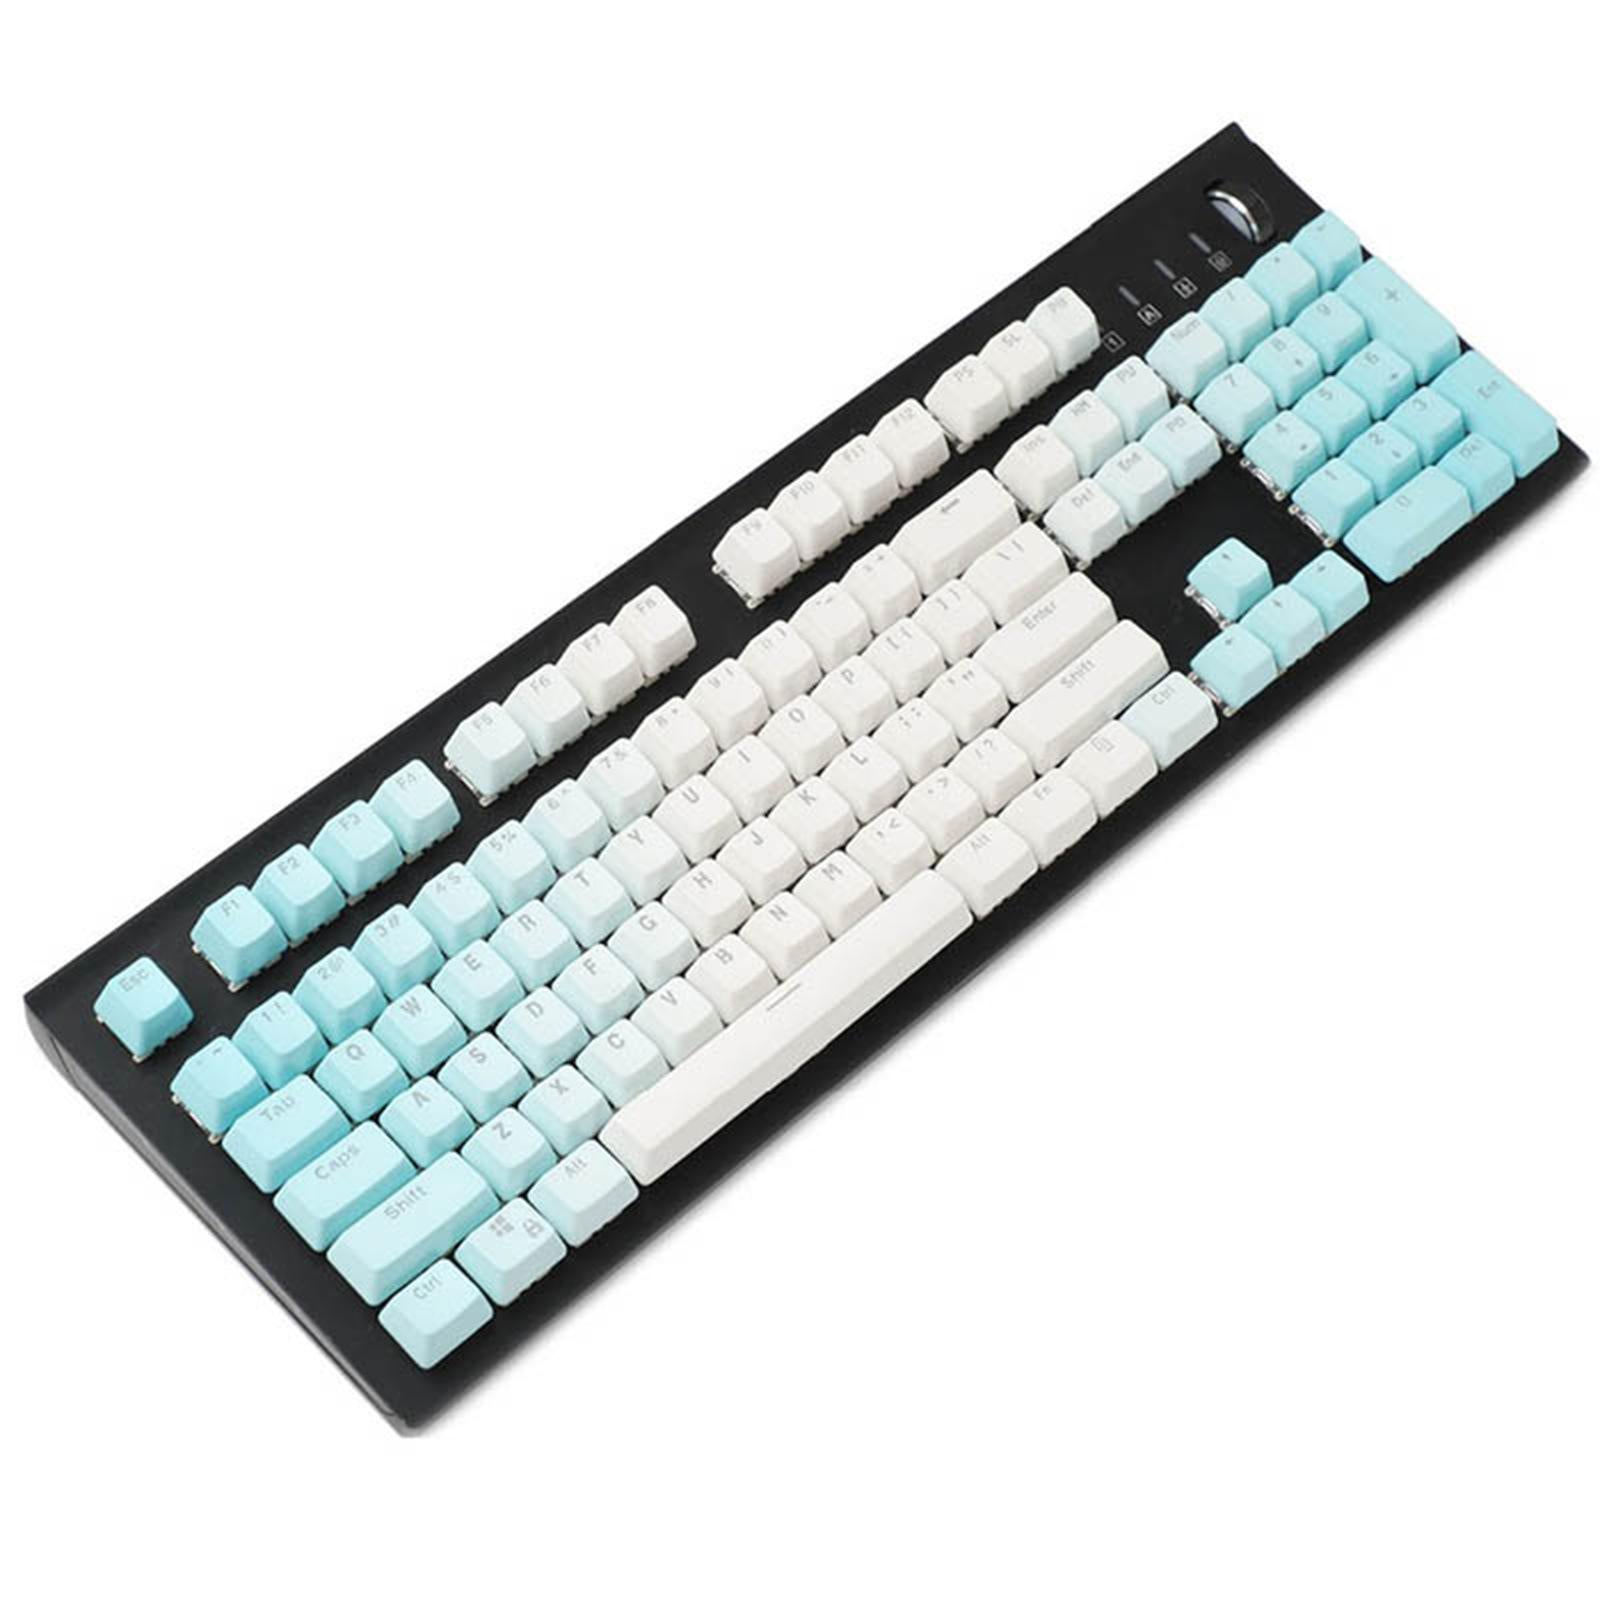 104 Keys Mechanical Switch Keyboard Keycaps PBT Keycaps  Blue Gradient A